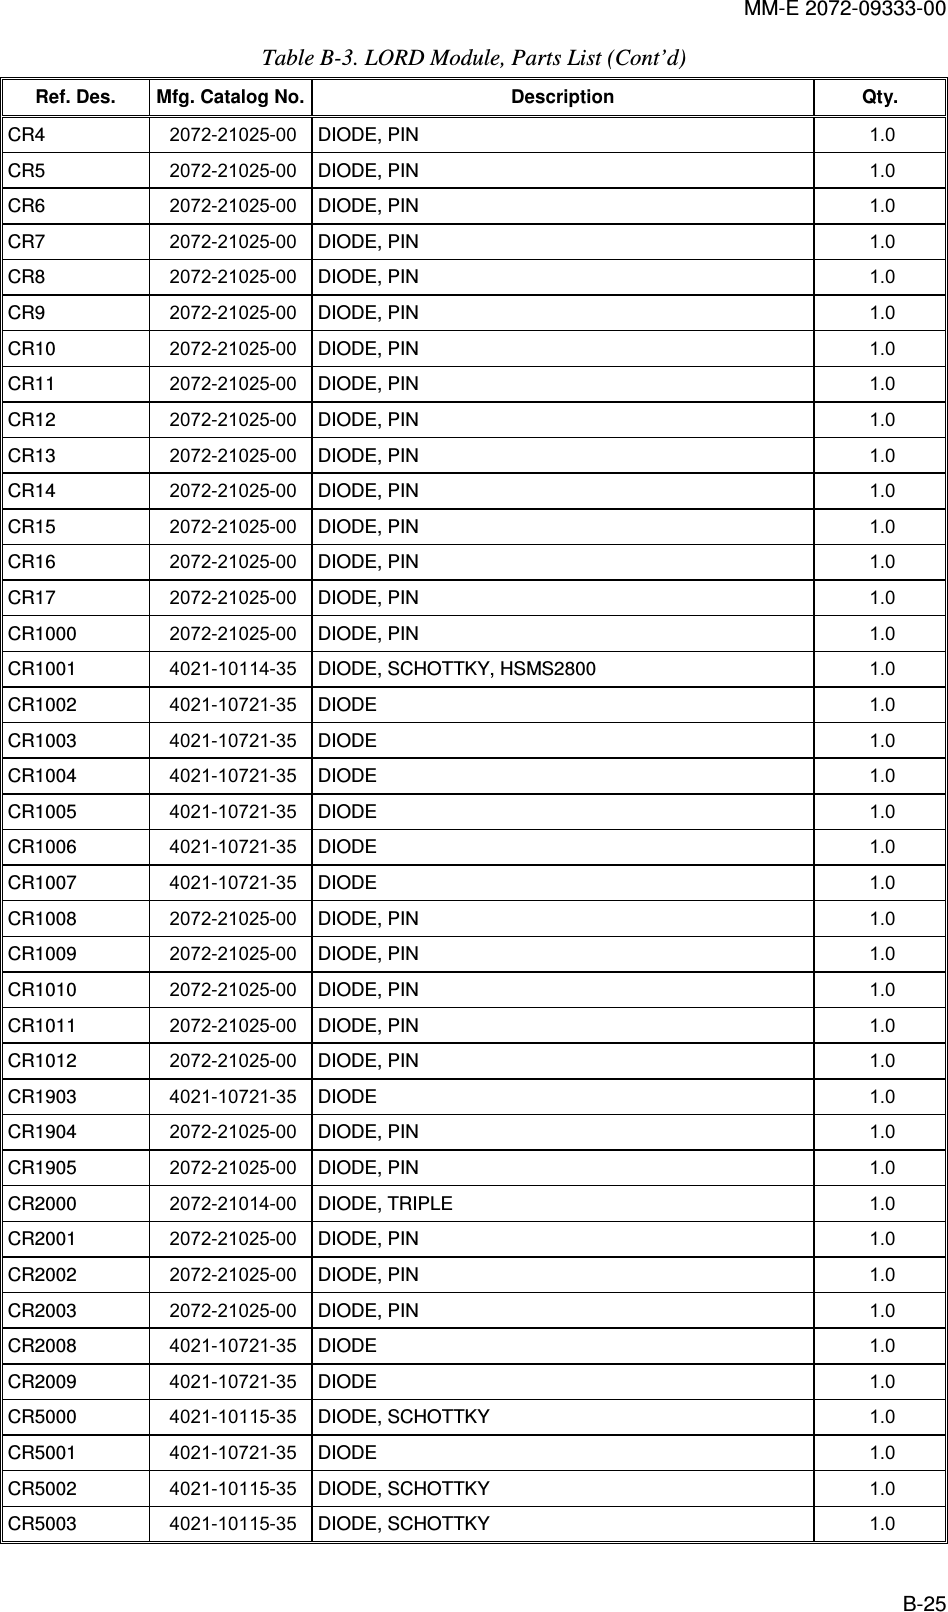 MM-E 2072-09333-00 B-25 Table  B-3. LORD Module, Parts List (Cont’d) Ref. Des.  Mfg. Catalog No. Description  Qty. CR4   2072-21025-00  DIODE, PIN  1.0   CR5   2072-21025-00  DIODE, PIN  1.0   CR6   2072-21025-00  DIODE, PIN  1.0   CR7   2072-21025-00  DIODE, PIN  1.0   CR8   2072-21025-00  DIODE, PIN  1.0   CR9   2072-21025-00  DIODE, PIN  1.0   CR10   2072-21025-00  DIODE, PIN  1.0   CR11   2072-21025-00  DIODE, PIN  1.0   CR12   2072-21025-00  DIODE, PIN  1.0   CR13   2072-21025-00  DIODE, PIN  1.0   CR14   2072-21025-00  DIODE, PIN  1.0   CR15   2072-21025-00  DIODE, PIN  1.0   CR16   2072-21025-00  DIODE, PIN  1.0   CR17   2072-21025-00  DIODE, PIN  1.0   CR1000   2072-21025-00  DIODE, PIN  1.0   CR1001   4021-10114-35  DIODE, SCHOTTKY, HSMS2800  1.0   CR1002   4021-10721-35  DIODE  1.0   CR1003   4021-10721-35  DIODE  1.0   CR1004   4021-10721-35  DIODE  1.0   CR1005   4021-10721-35  DIODE  1.0   CR1006   4021-10721-35  DIODE  1.0   CR1007   4021-10721-35  DIODE  1.0   CR1008   2072-21025-00  DIODE, PIN  1.0   CR1009   2072-21025-00  DIODE, PIN  1.0   CR1010   2072-21025-00  DIODE, PIN  1.0   CR1011   2072-21025-00  DIODE, PIN  1.0   CR1012   2072-21025-00  DIODE, PIN  1.0   CR1903   4021-10721-35  DIODE  1.0   CR1904   2072-21025-00  DIODE, PIN  1.0   CR1905   2072-21025-00  DIODE, PIN  1.0   CR2000   2072-21014-00  DIODE, TRIPLE  1.0   CR2001   2072-21025-00  DIODE, PIN  1.0   CR2002   2072-21025-00  DIODE, PIN  1.0   CR2003   2072-21025-00  DIODE, PIN  1.0   CR2008   4021-10721-35  DIODE  1.0   CR2009   4021-10721-35  DIODE  1.0   CR5000   4021-10115-35  DIODE, SCHOTTKY  1.0   CR5001   4021-10721-35  DIODE  1.0   CR5002   4021-10115-35  DIODE, SCHOTTKY  1.0   CR5003   4021-10115-35  DIODE, SCHOTTKY  1.0   